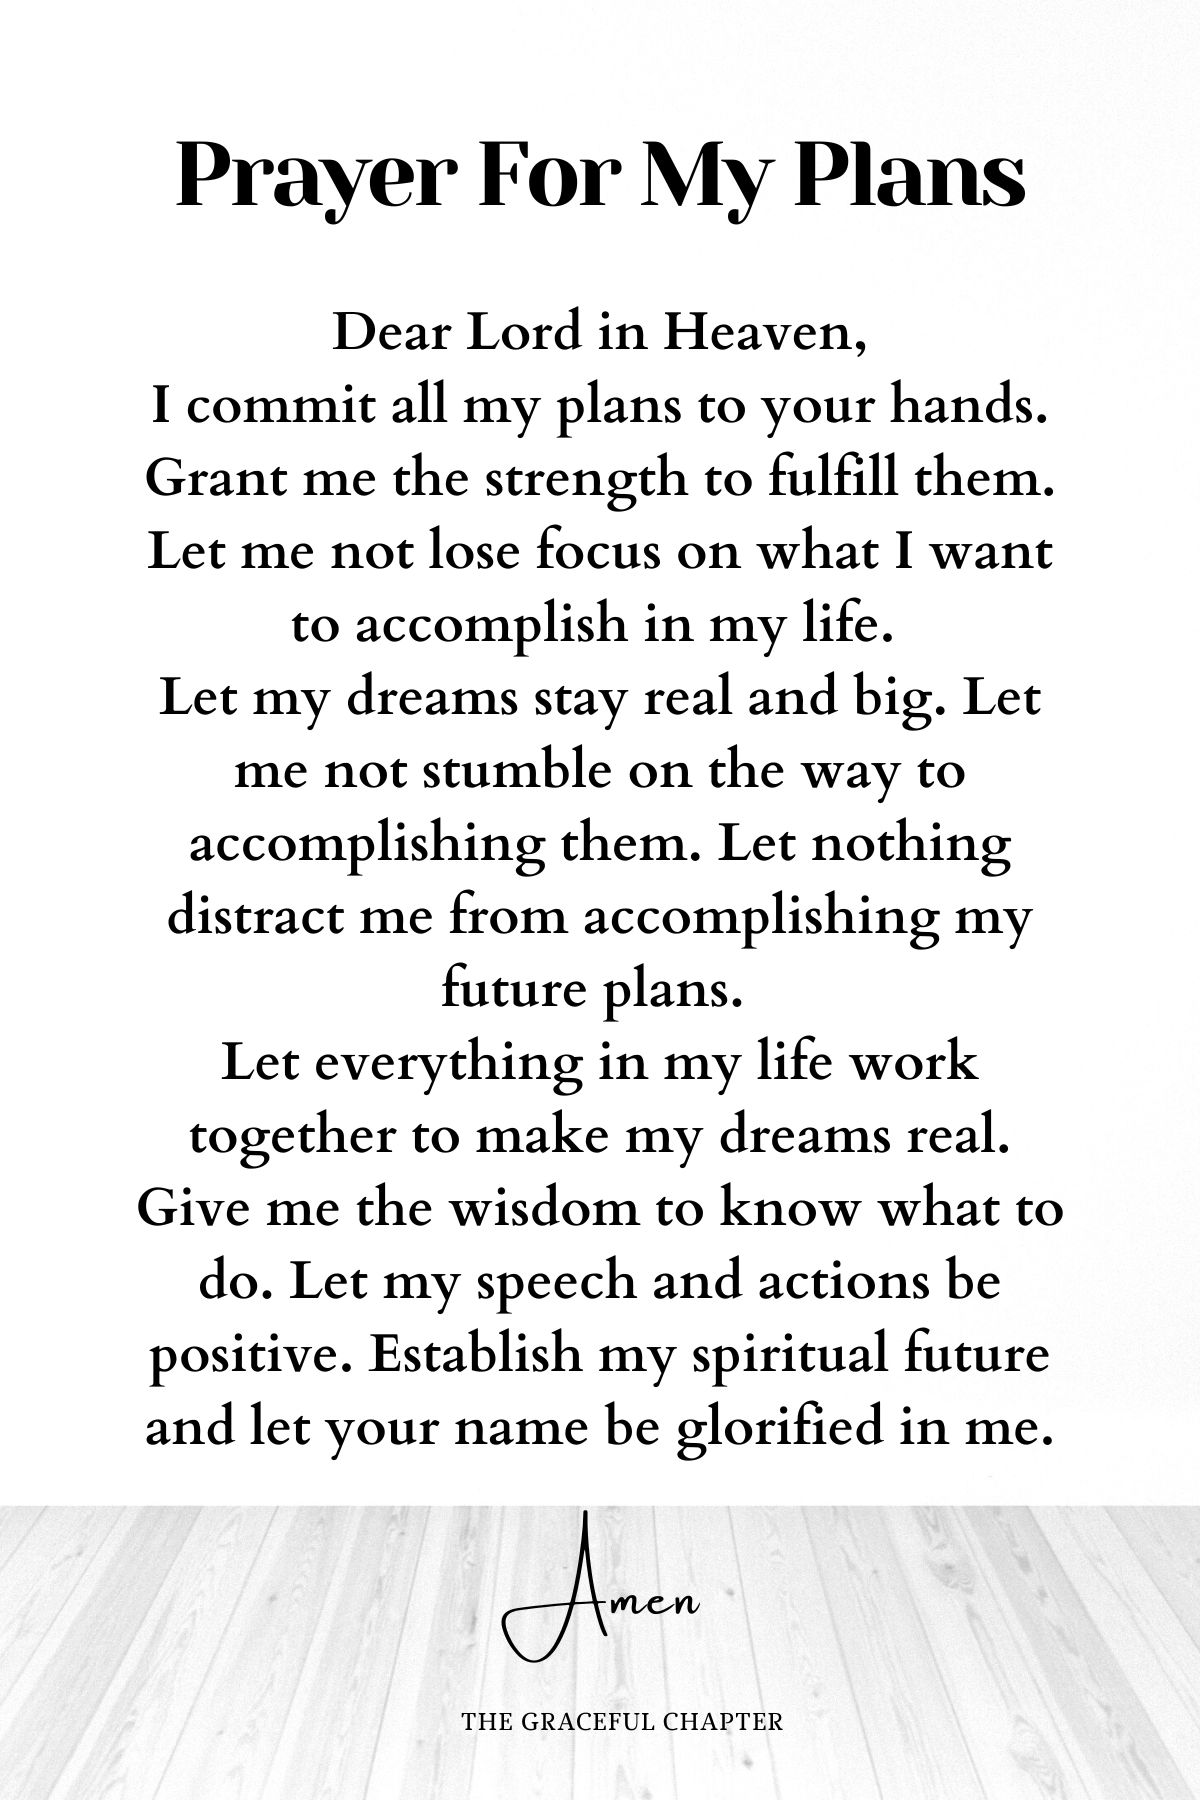 Prayer for my plans - prayers for myself